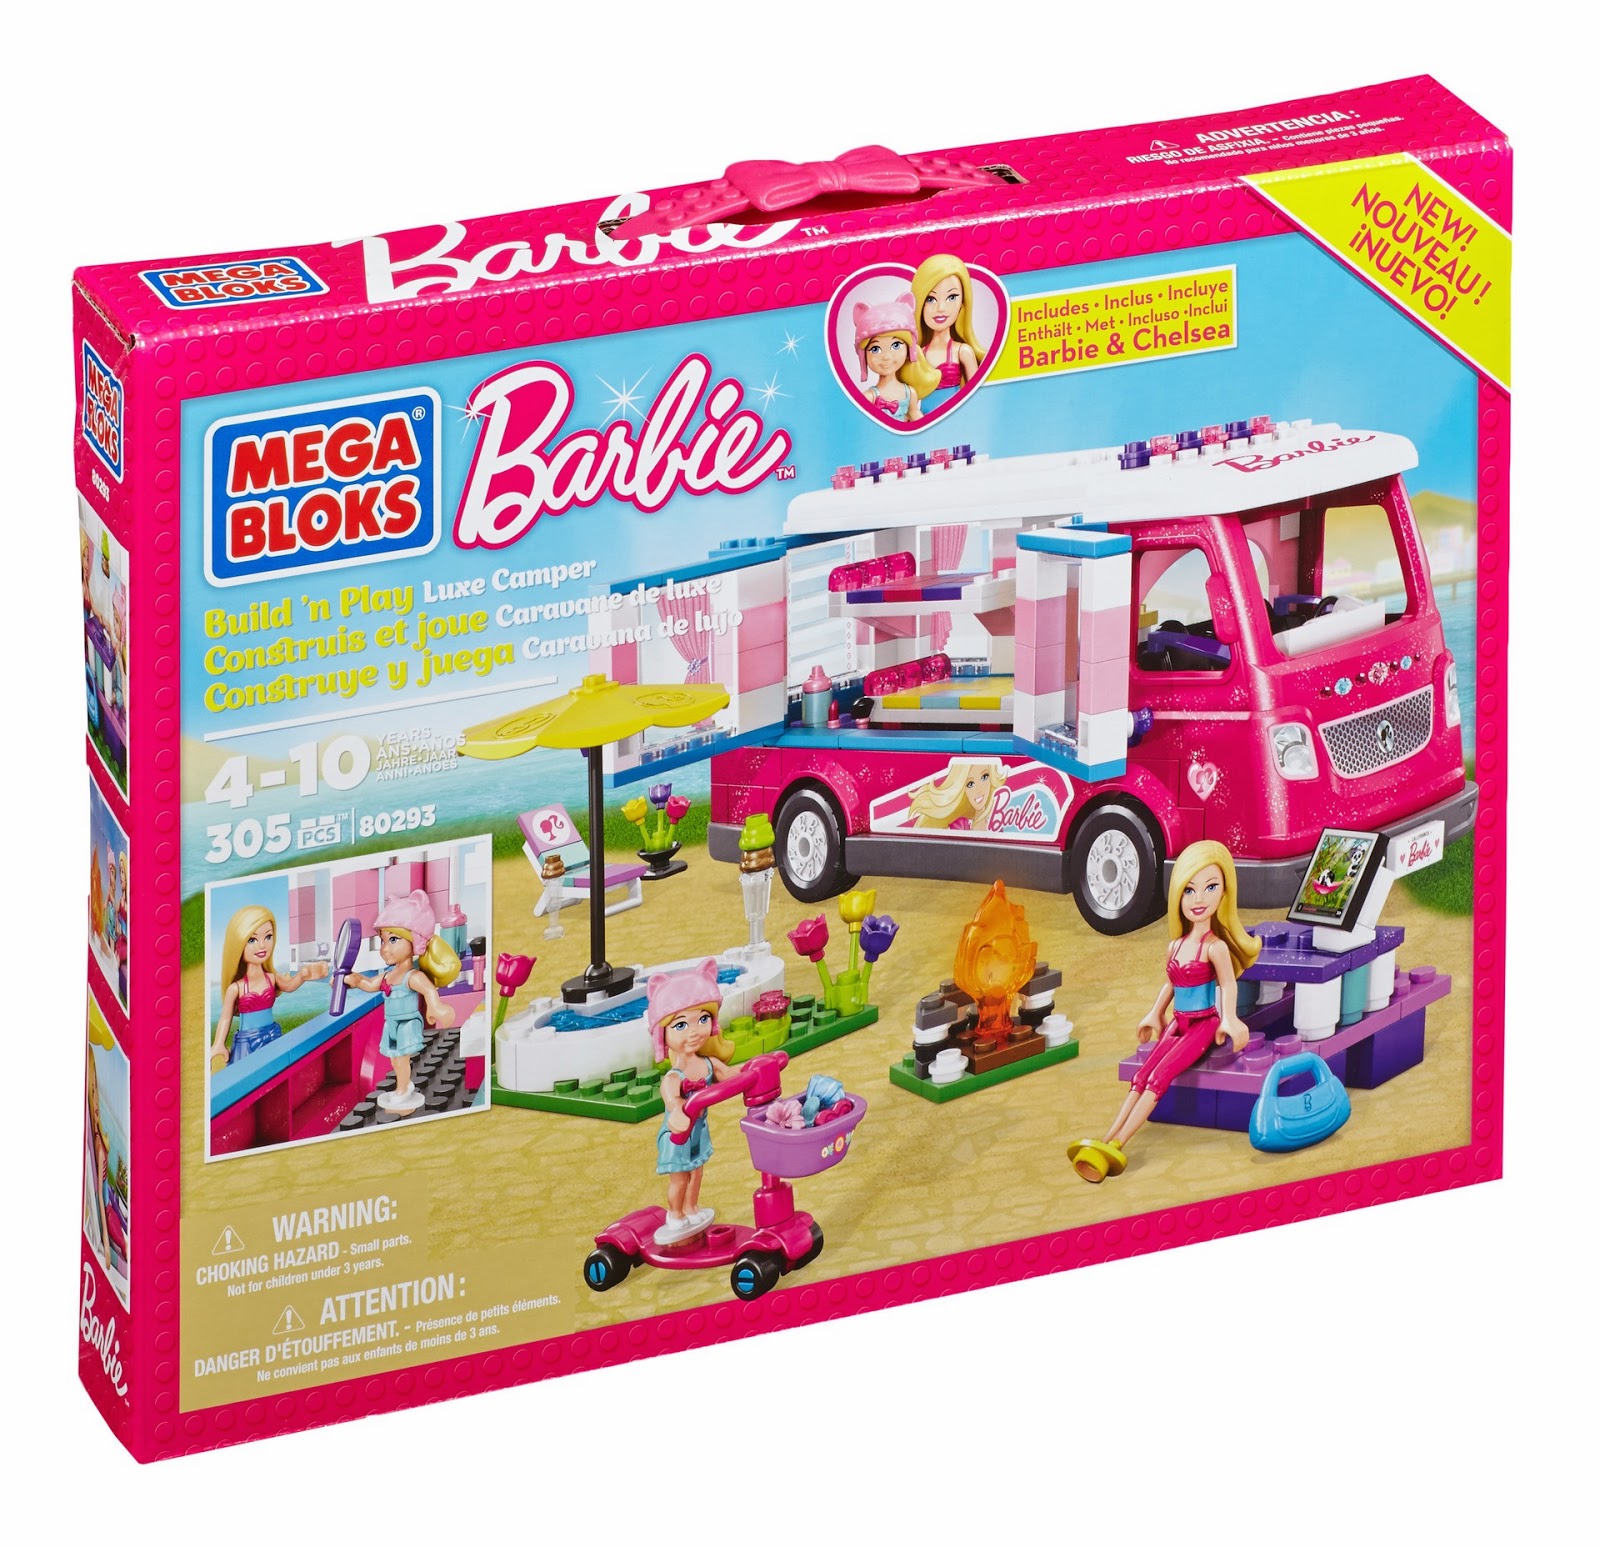 Thanks Mail Carrier Mega Bloks Barbie  Build n Play 